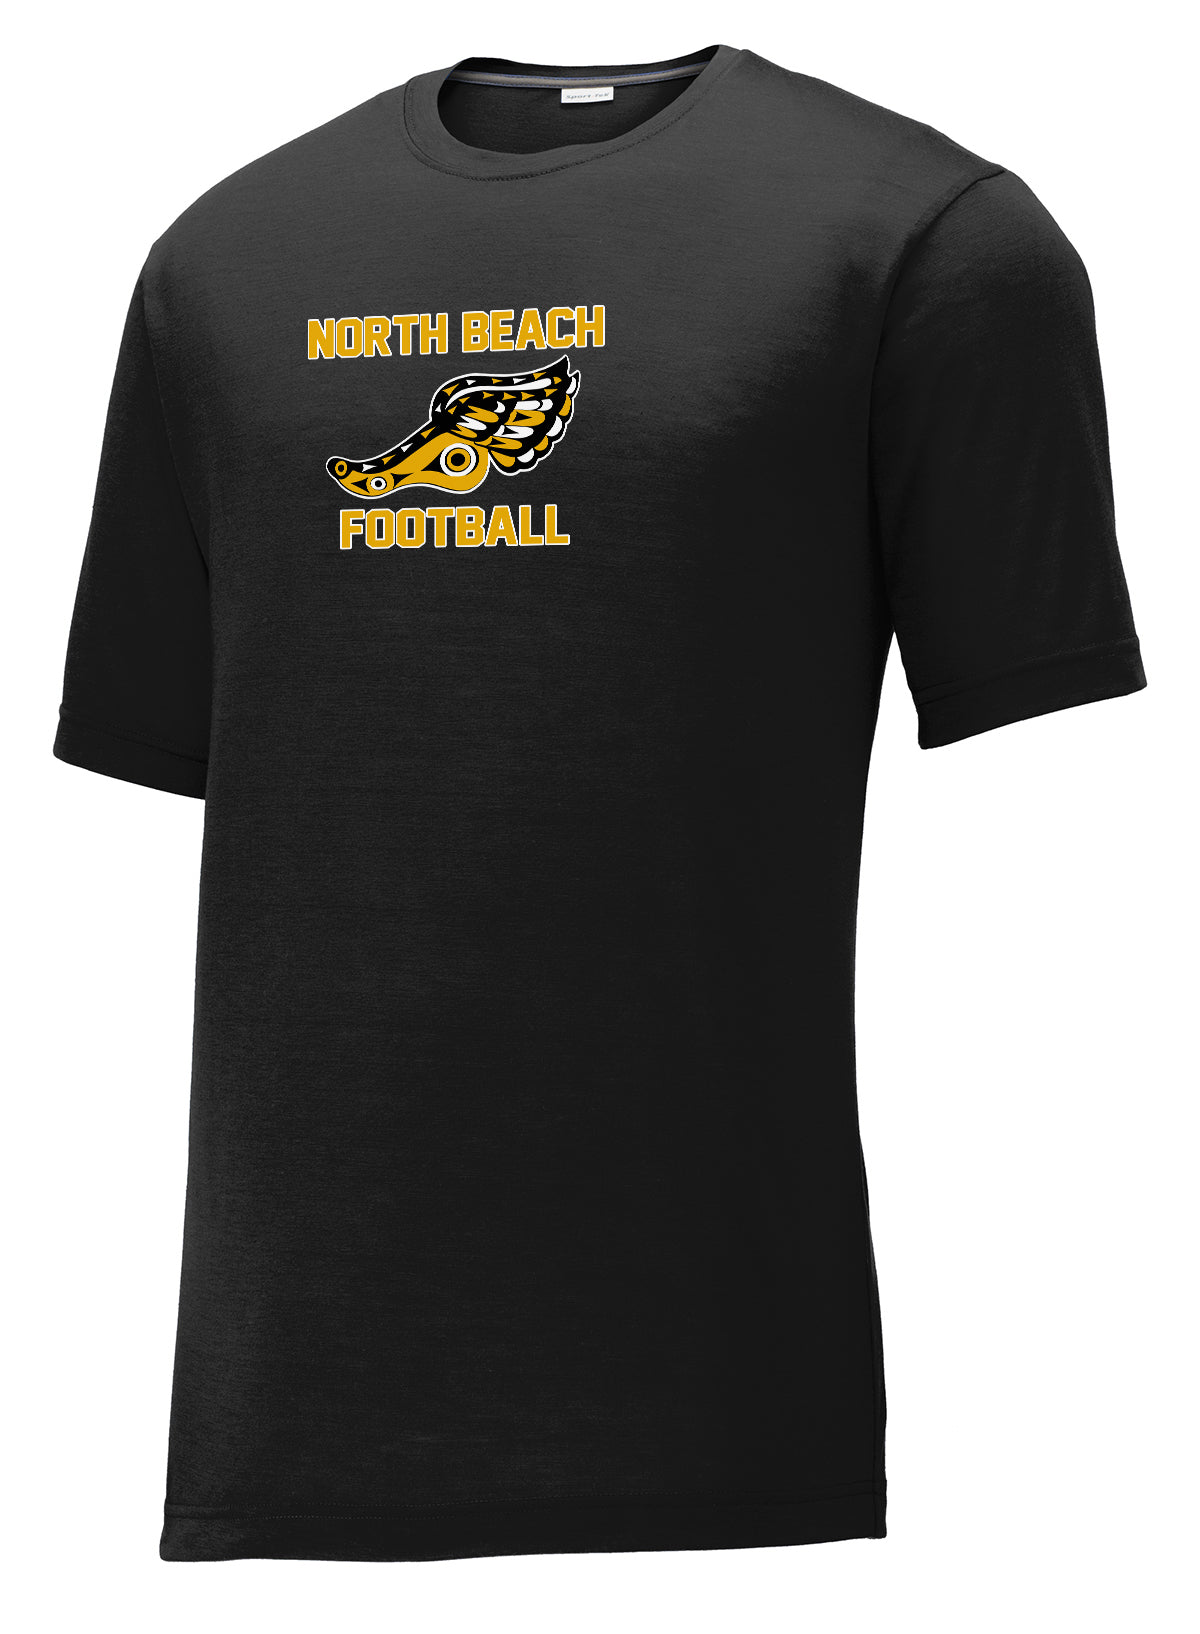 North Beach Football CottonTouch Performance T-Shirt